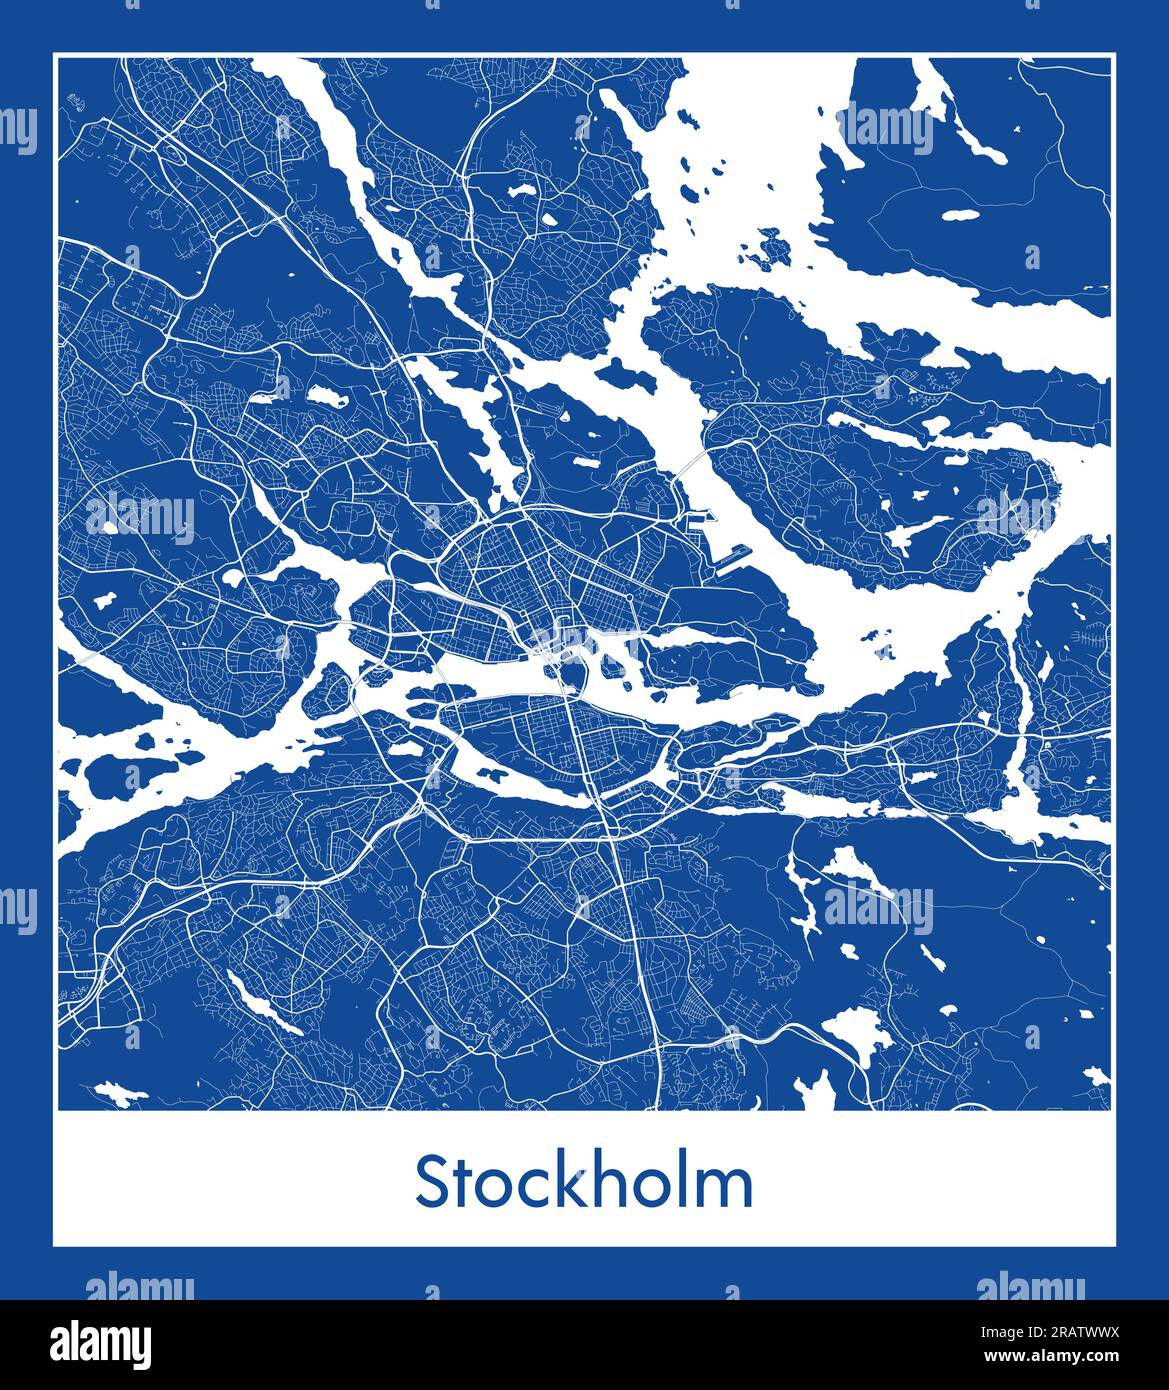 Stockholm Sweden Europe City map blue print vector illustration Stock Vector